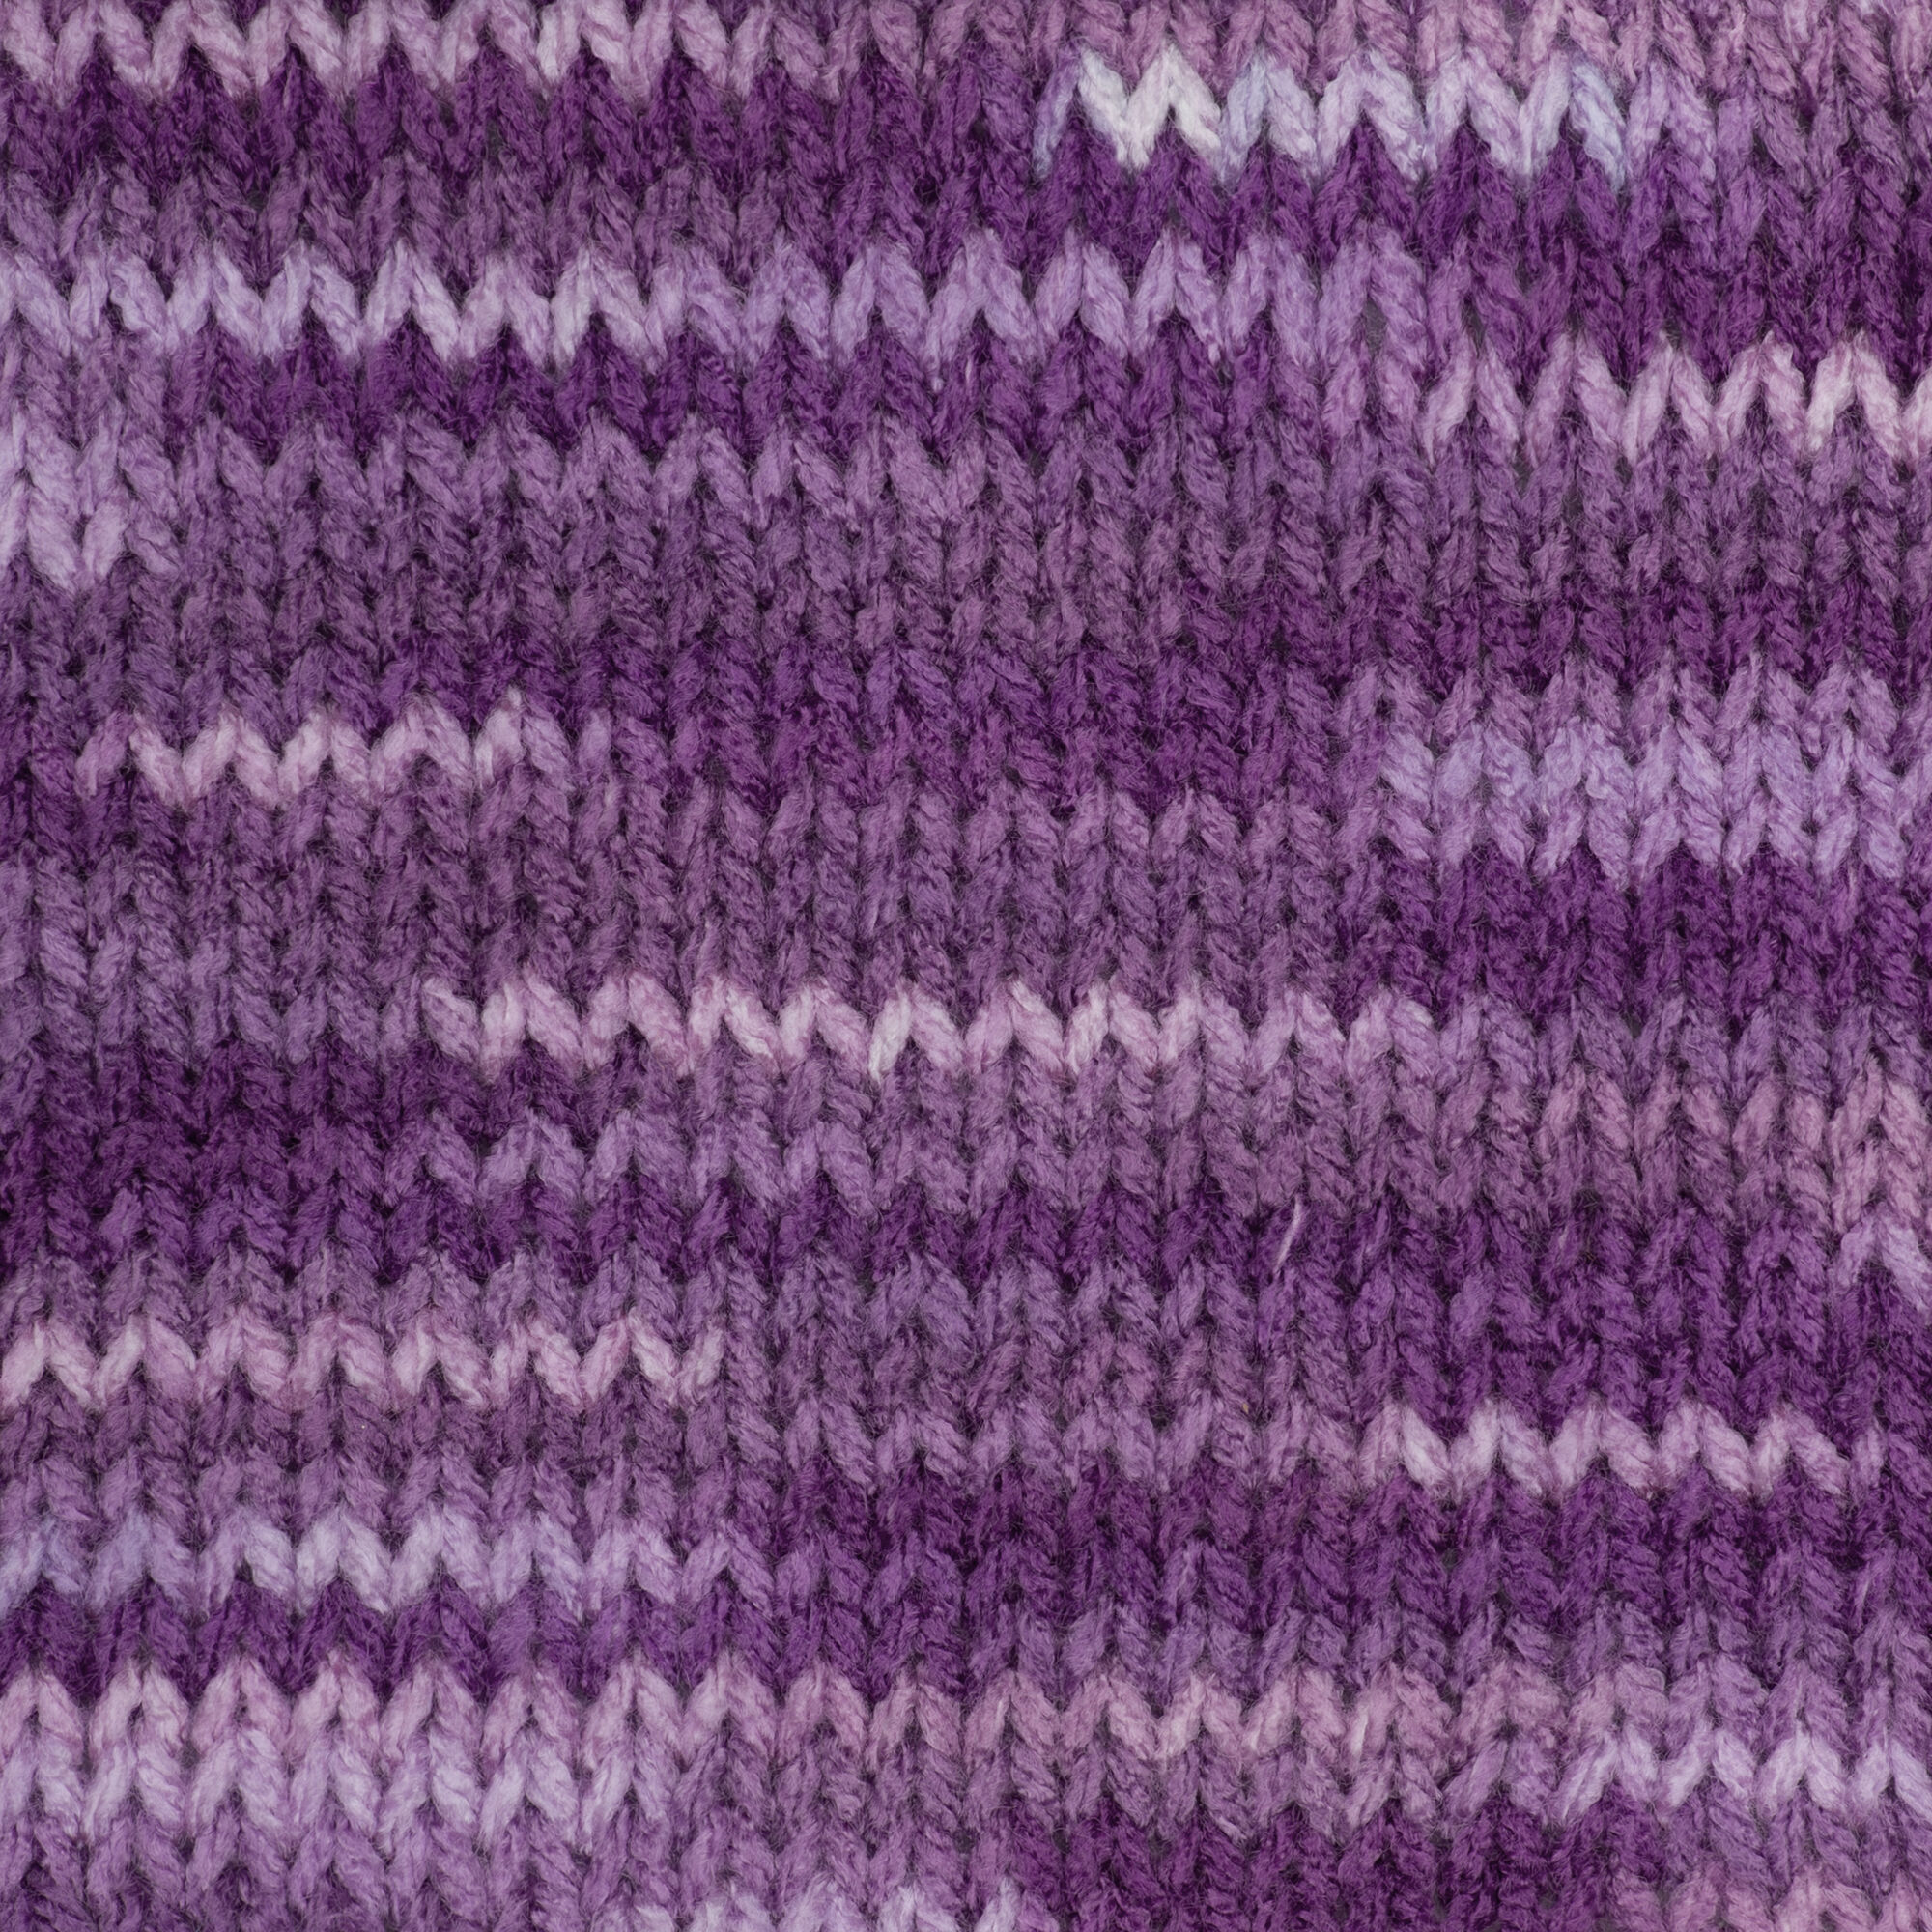 Red Heart® Super Saver® #4 Medium Acrylic Yarn, Purple Tones 5oz/142g, 236 Yards - image 3 of 6